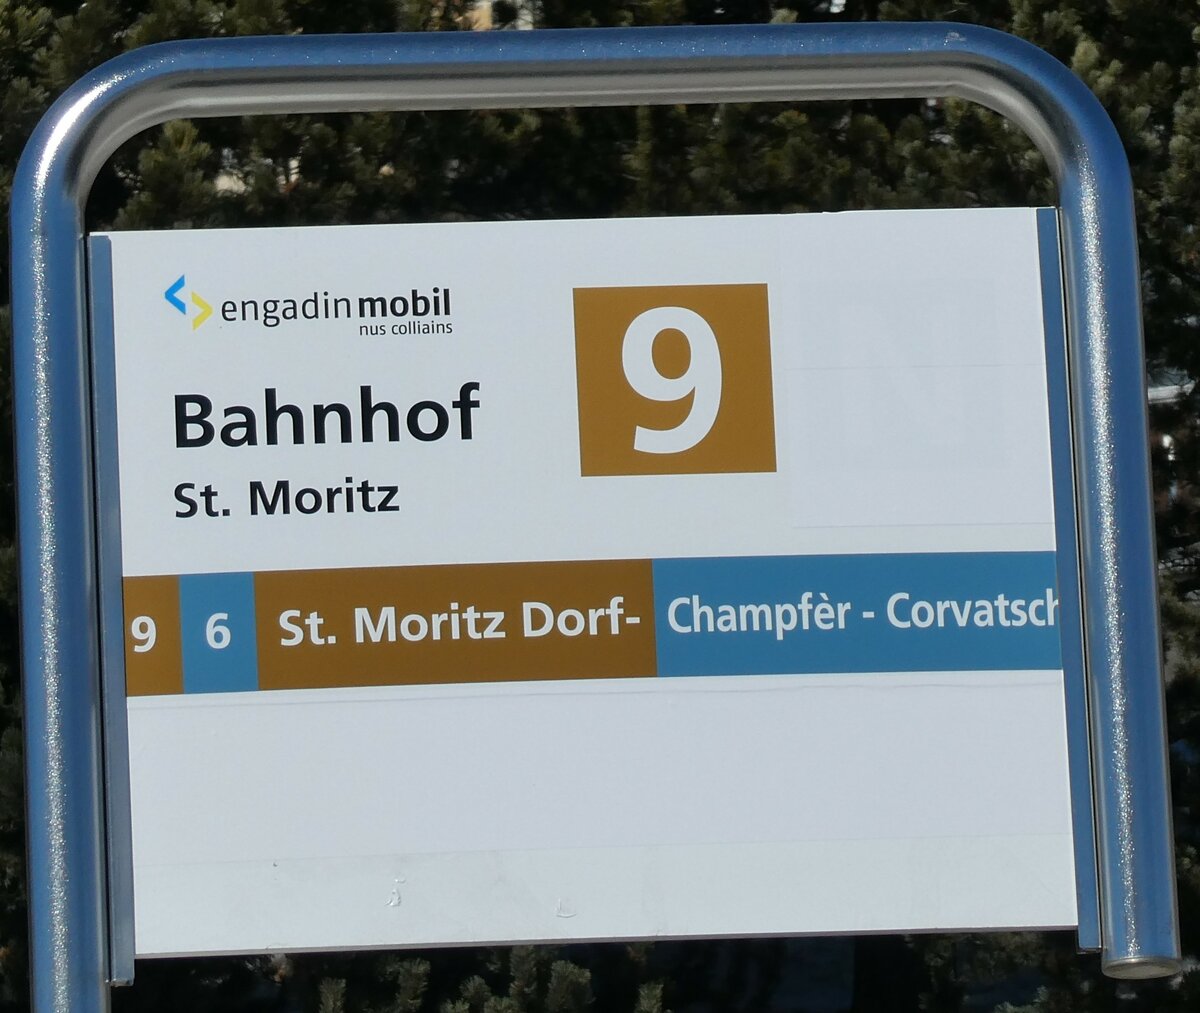 (233'662) - engadin mobil-Haltestellenschild - St. Moritz, Bahnhof - am 10. Mrz 2022